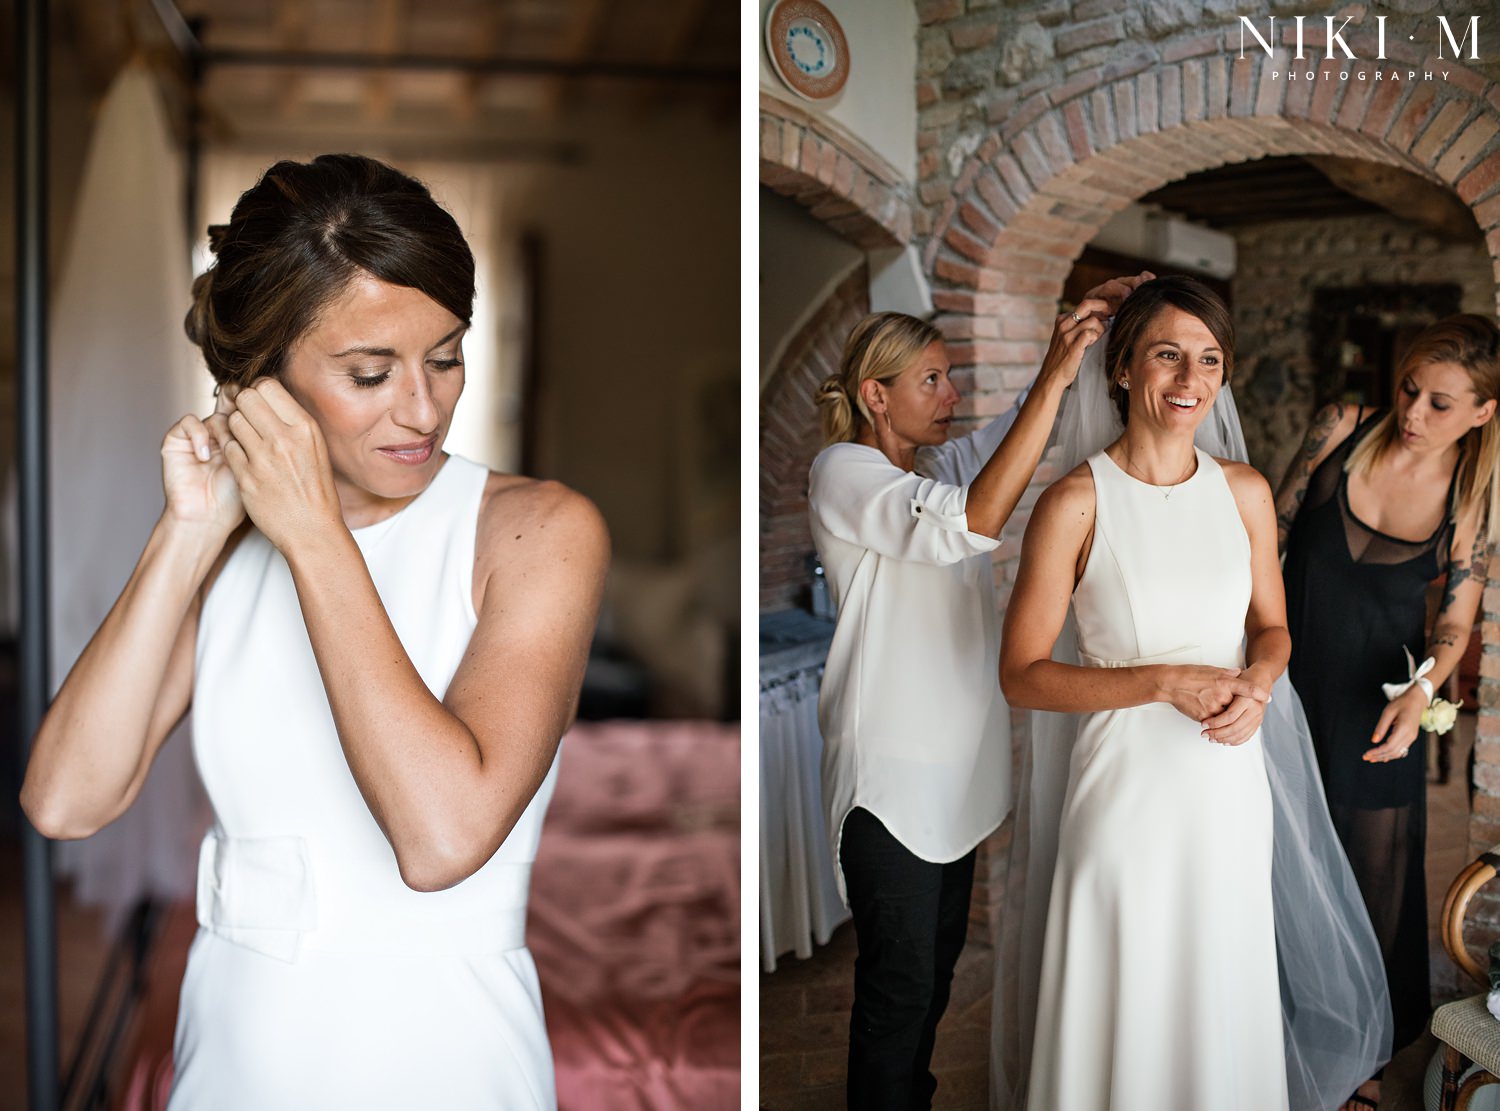 The Bride gets ready before the big day at her Tuscany wedding venue, Villa Ricrio